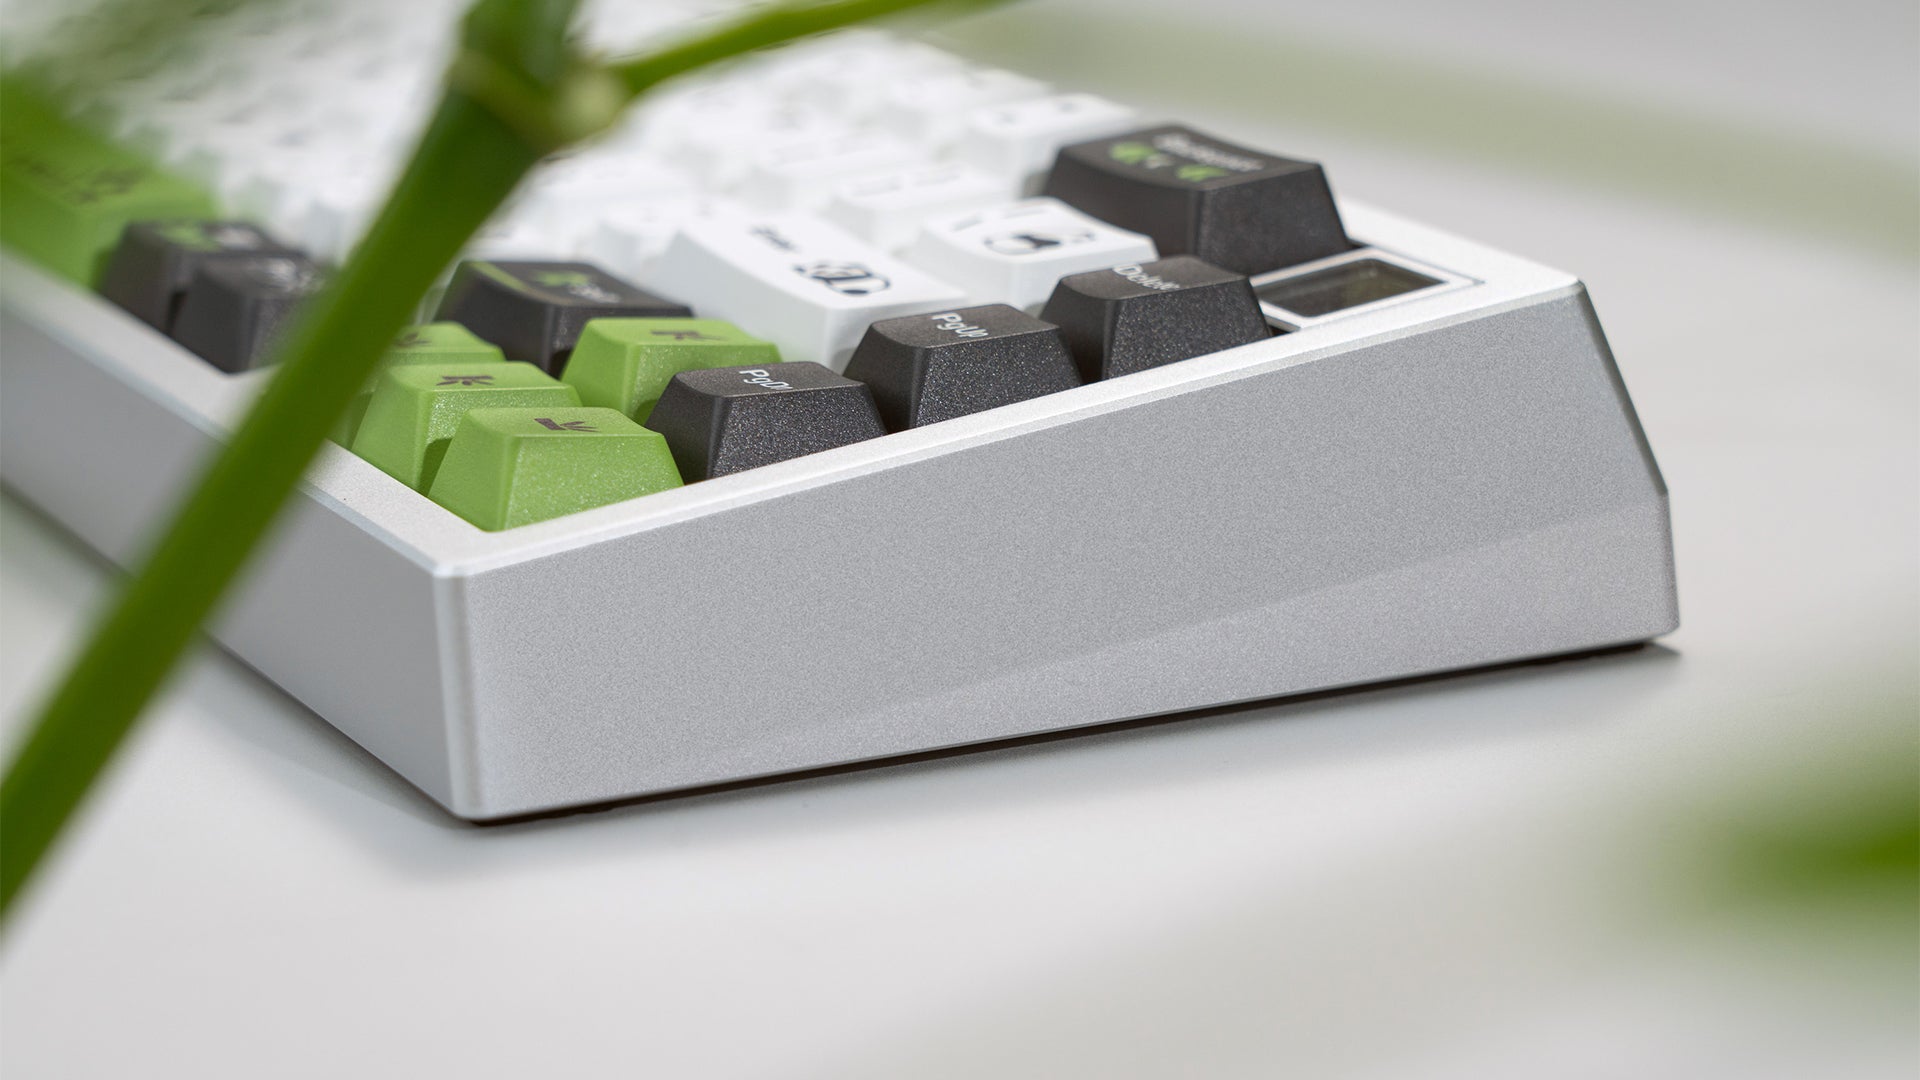 Zoom65 V3 Keyboard - Panda Special Edition [Group Buy]